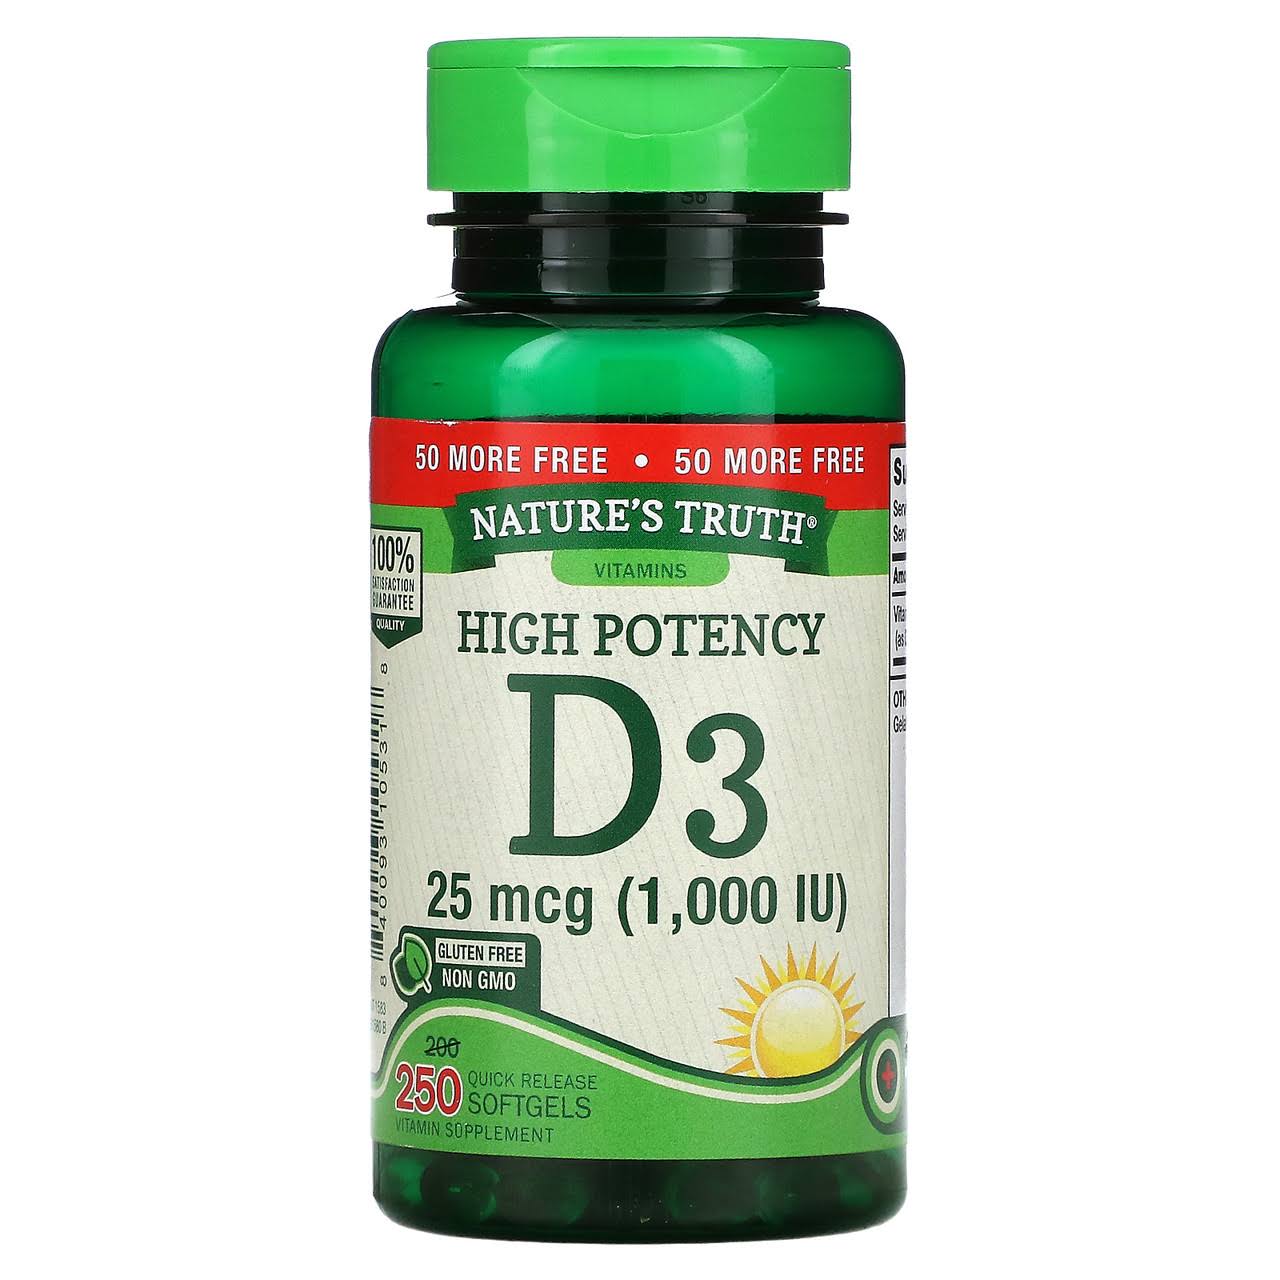 Nature's Truth High Potency Vitamin D3 25 mcg (1000 IU) 250 Quick Release Softgels